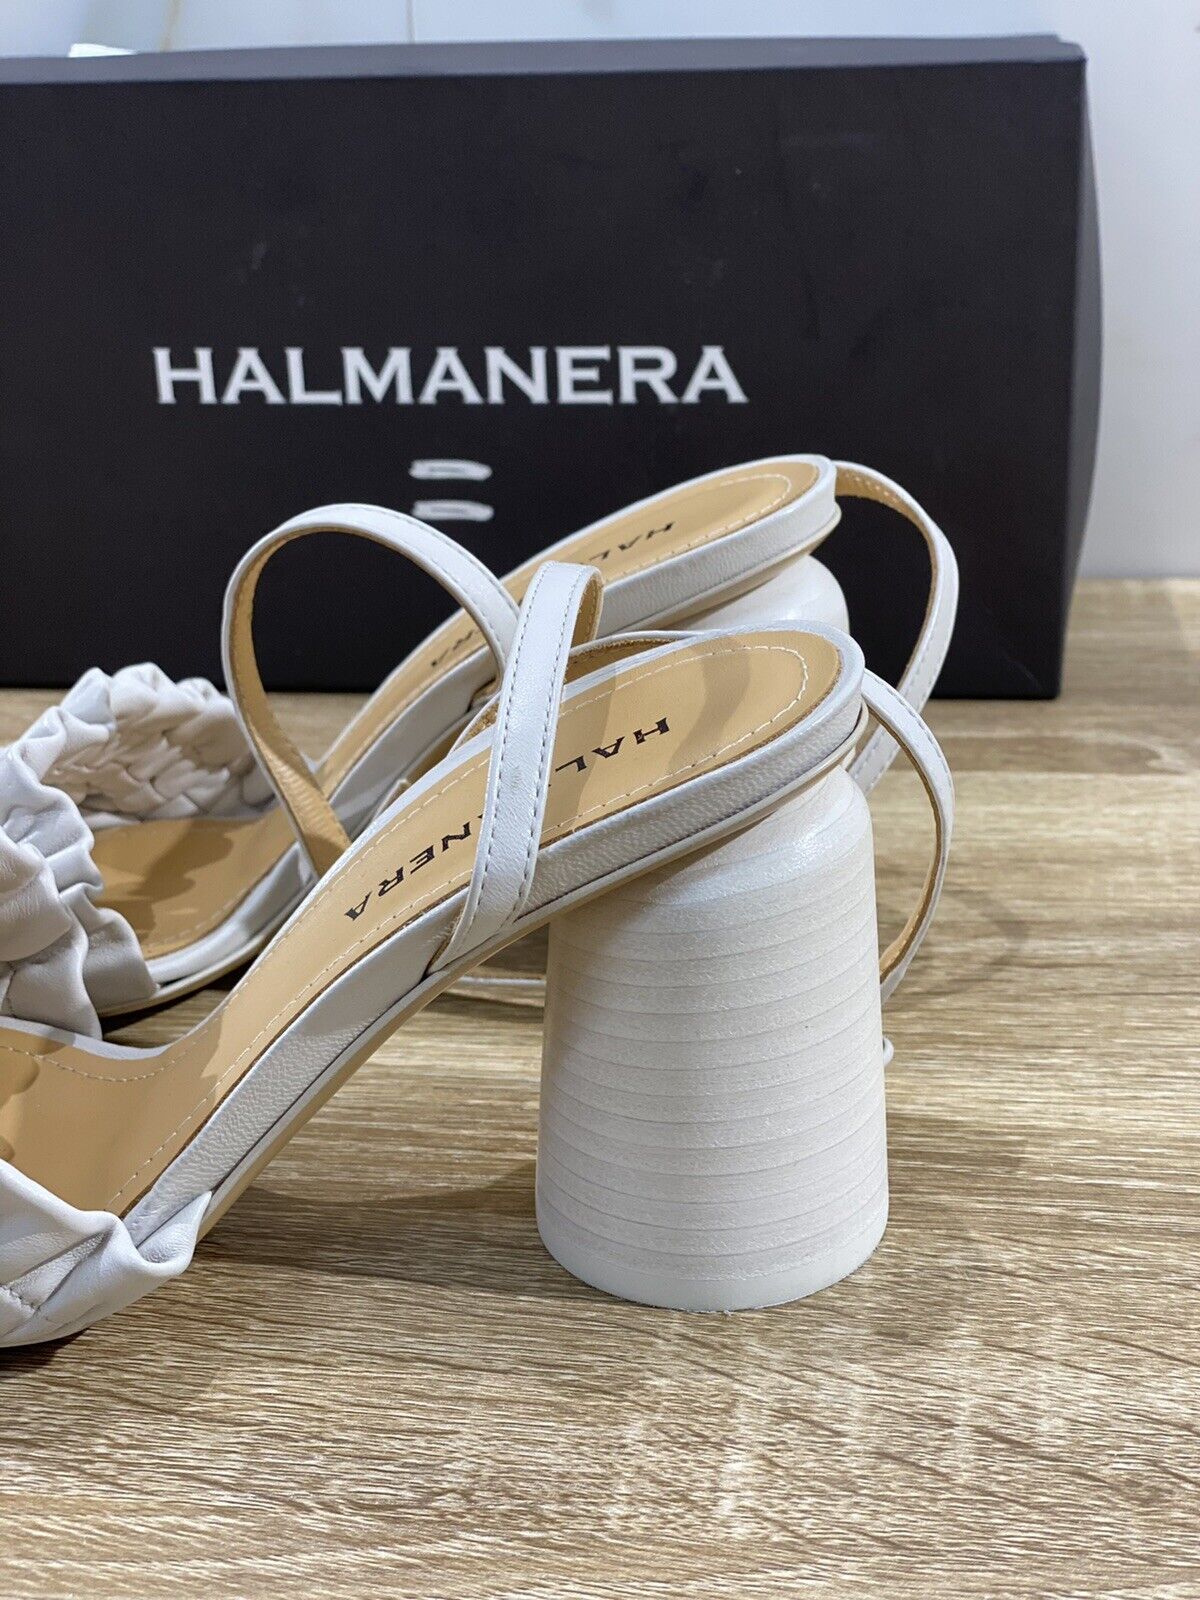 Halmanera Sandalo donna in pelle Ghiaccio   luxury sandal 36